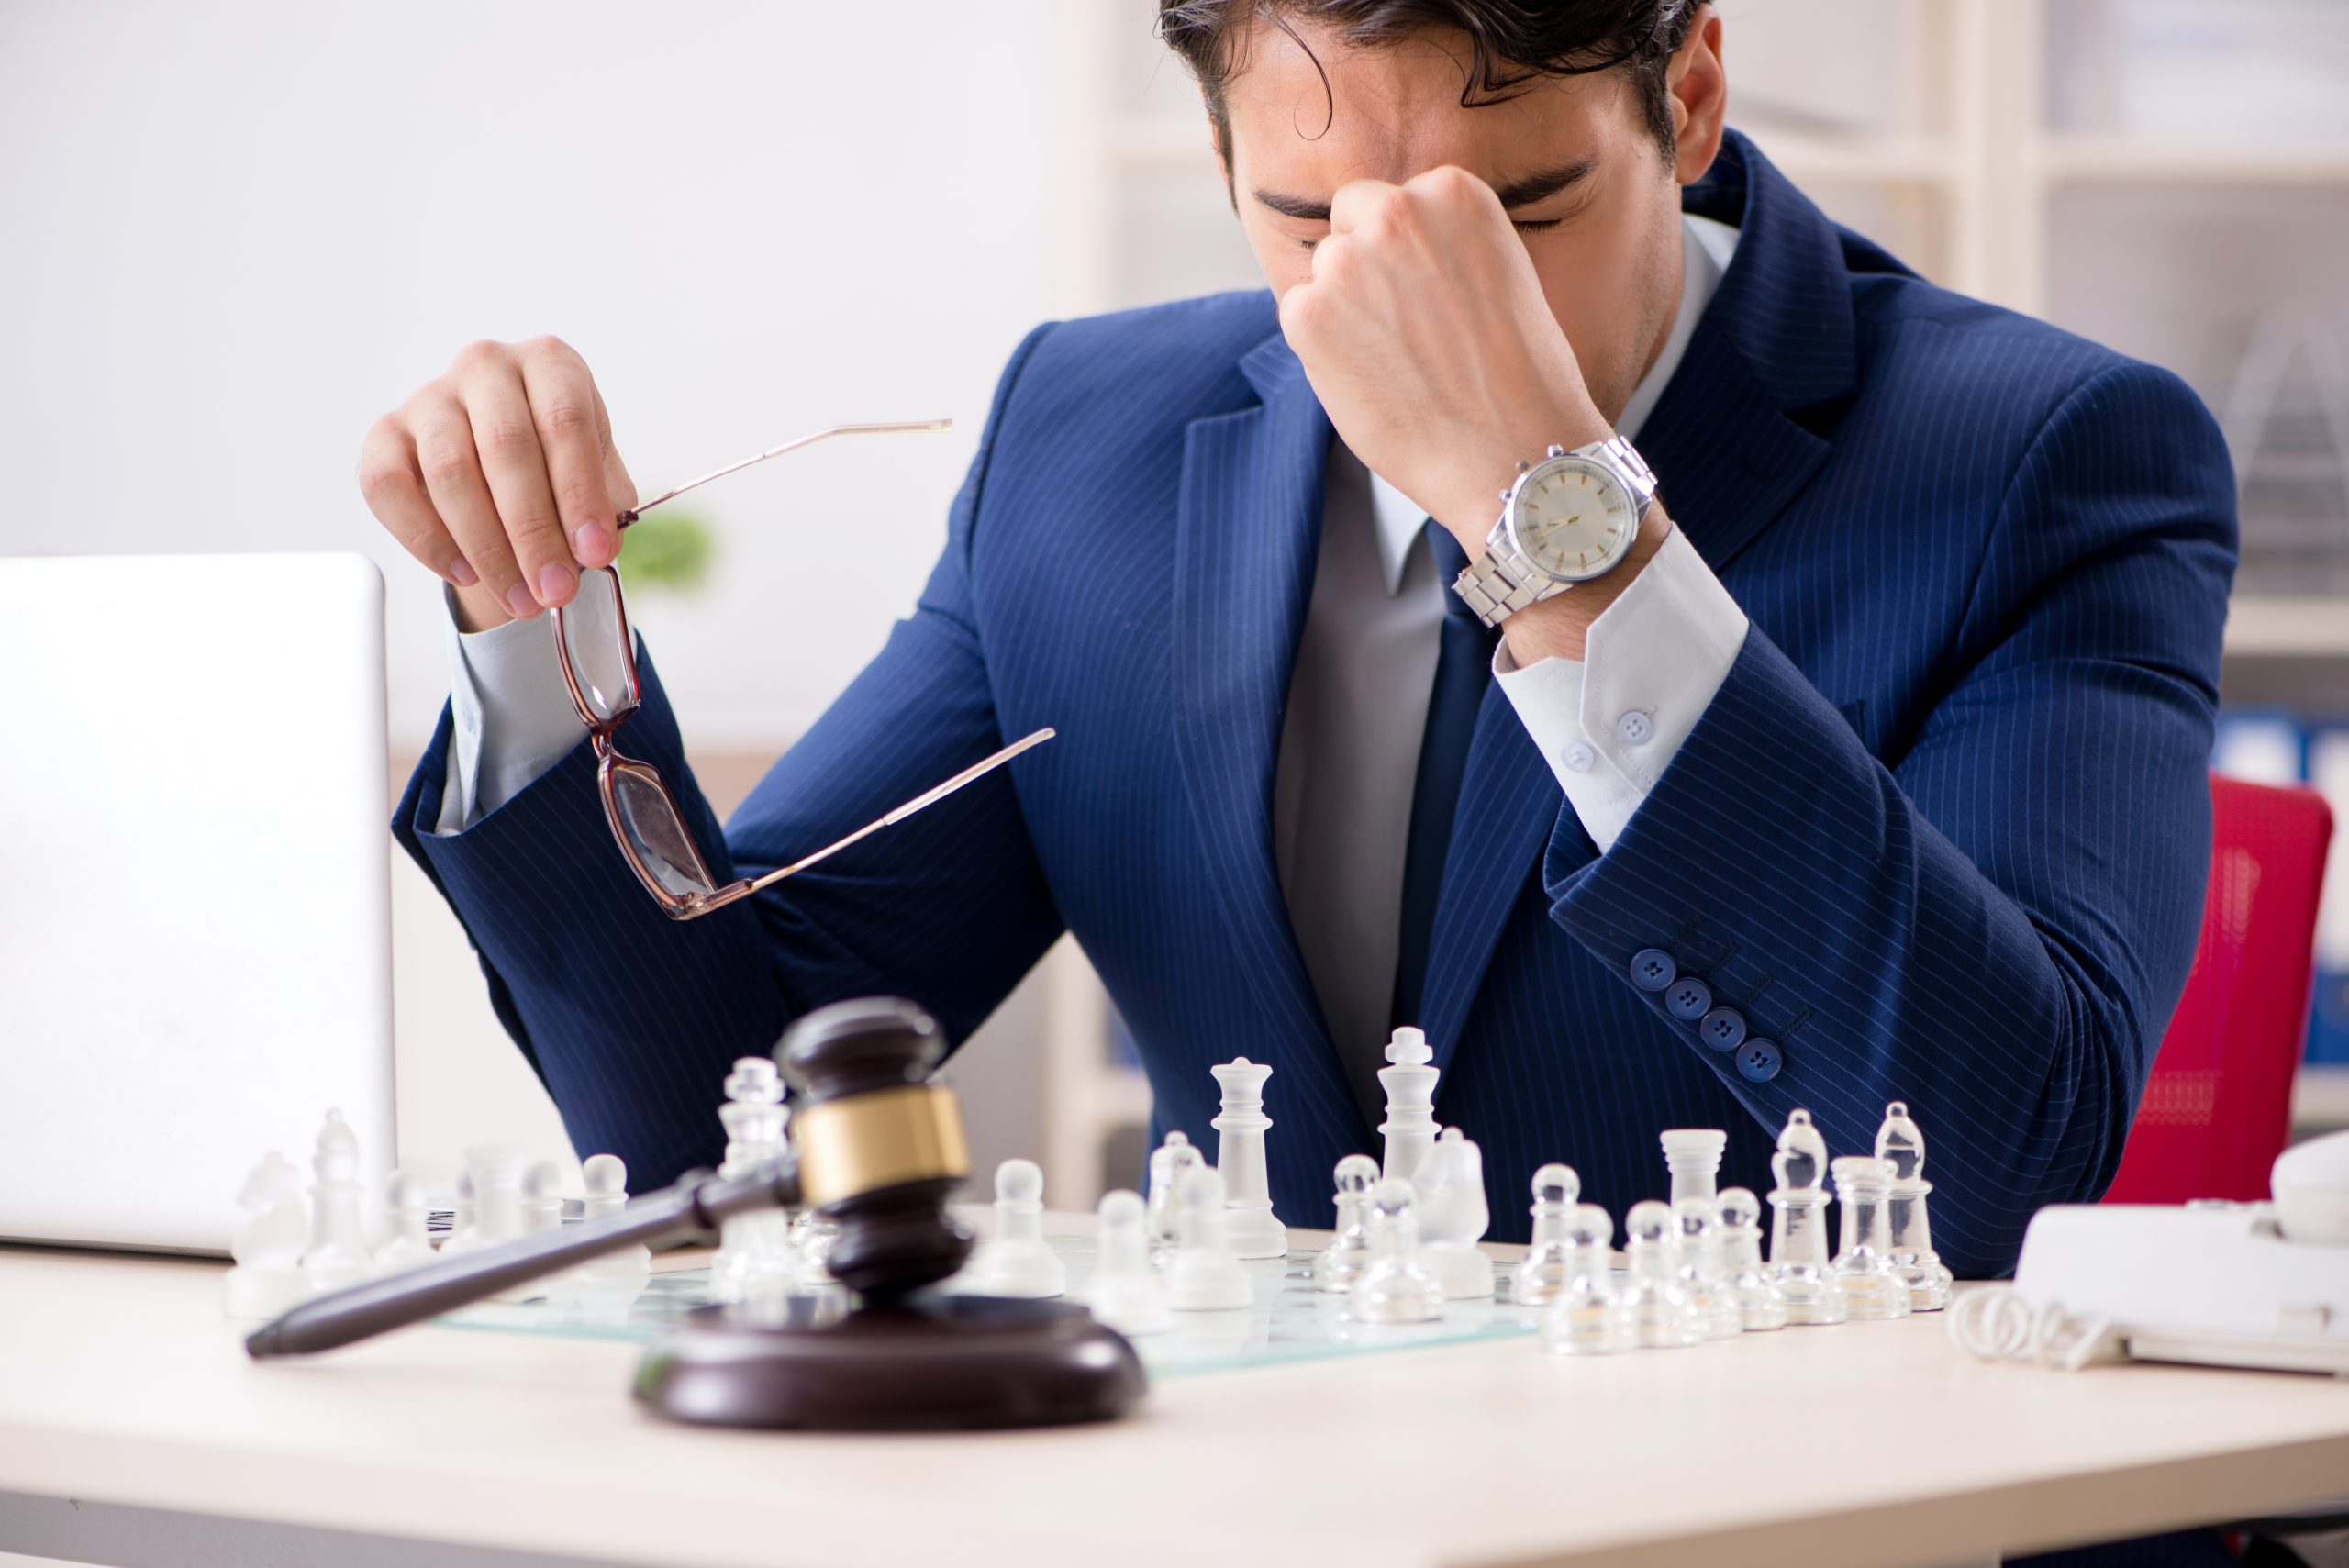 A focused businessman contemplating his next move on an aggressive chessboard, symbolizing strategic representation.